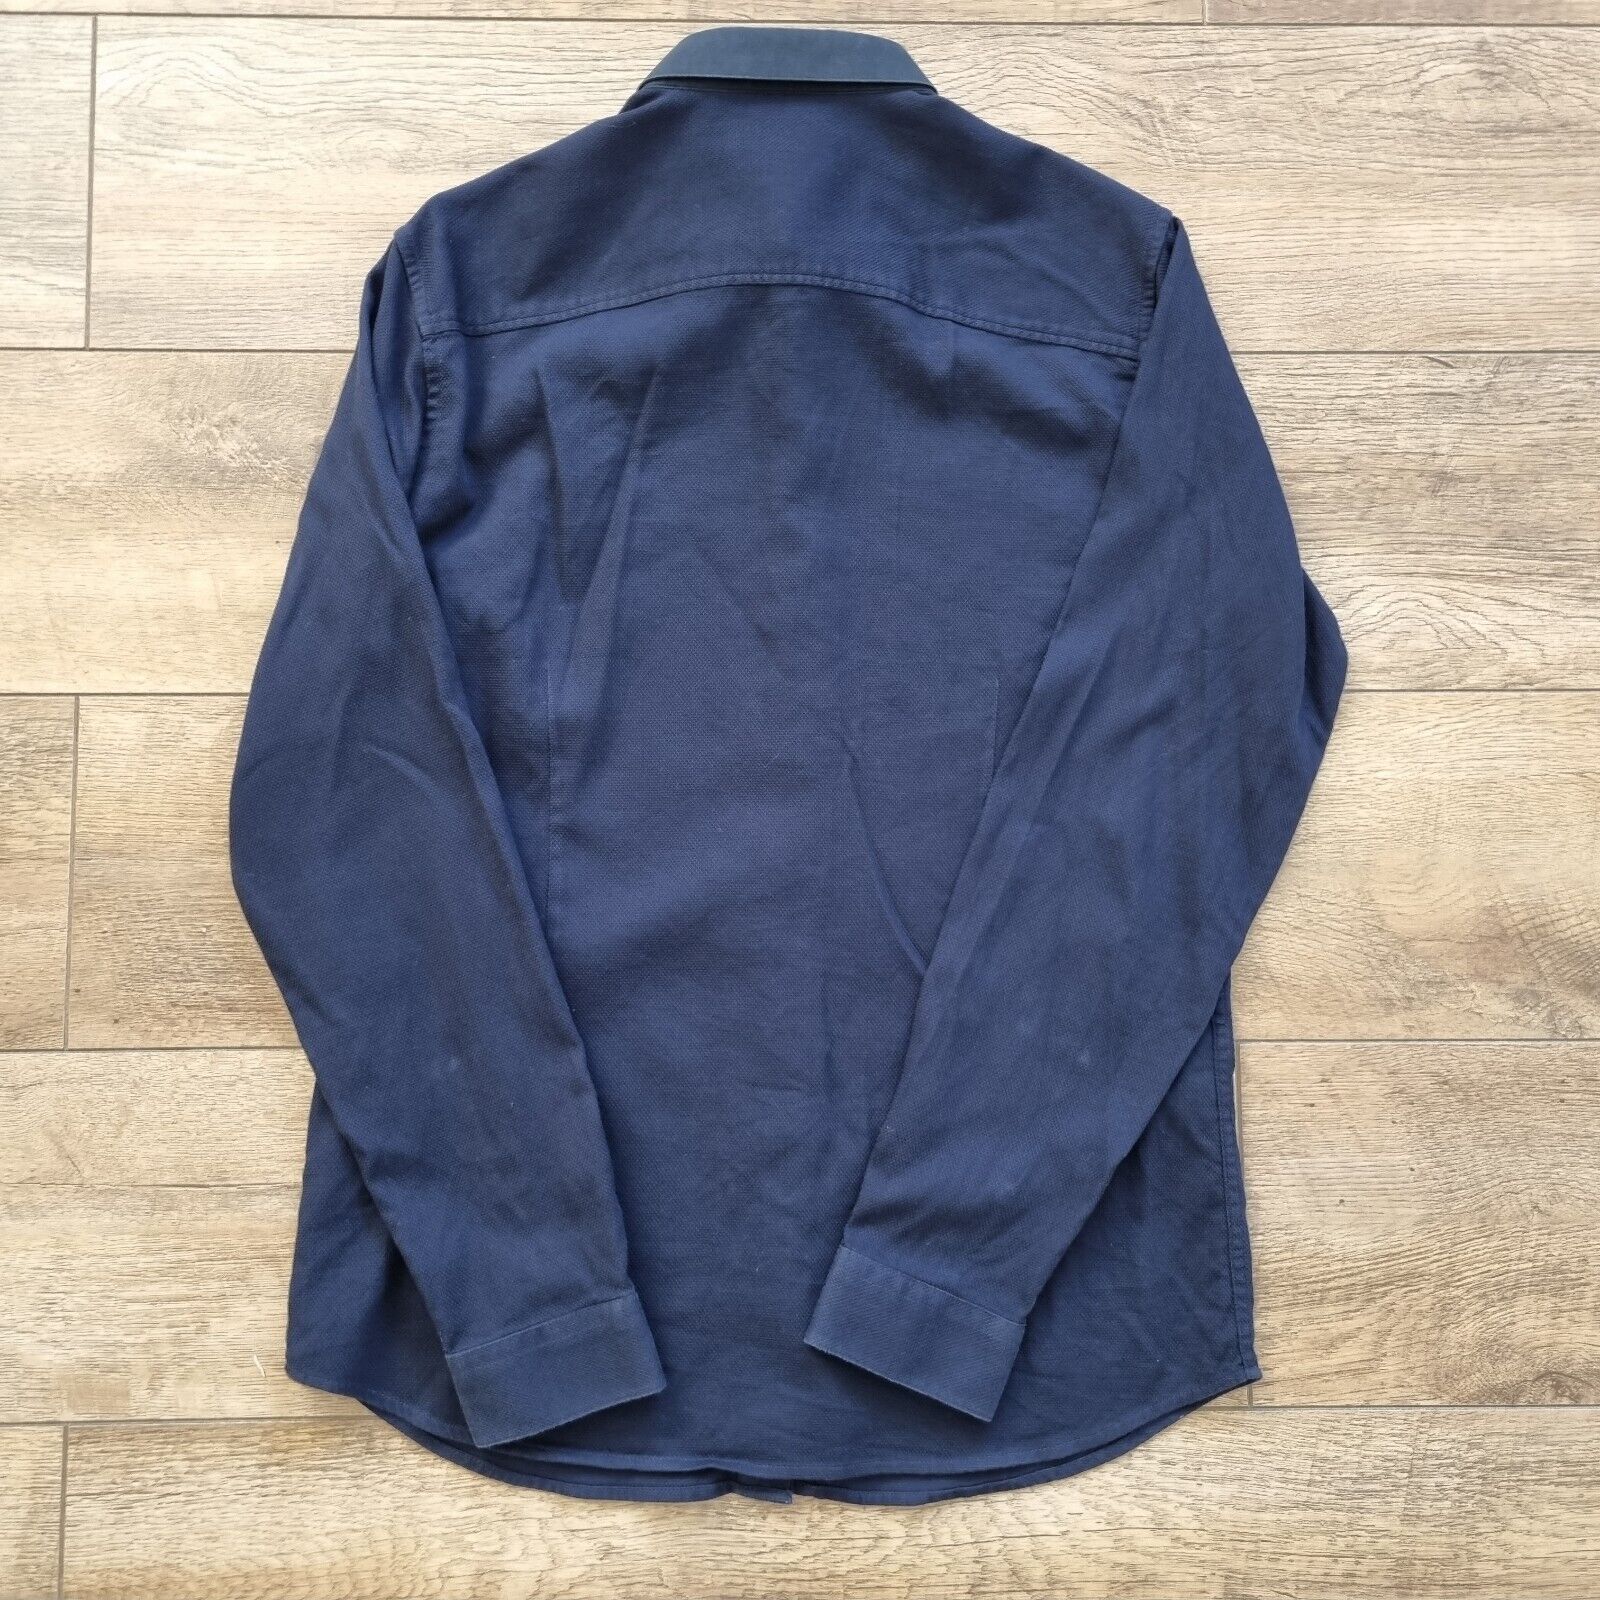 Jack & Jones Premium Mens Shirt Blue Stretch Long Sleeve Shirt With Black Collar - Bonnie Lassio